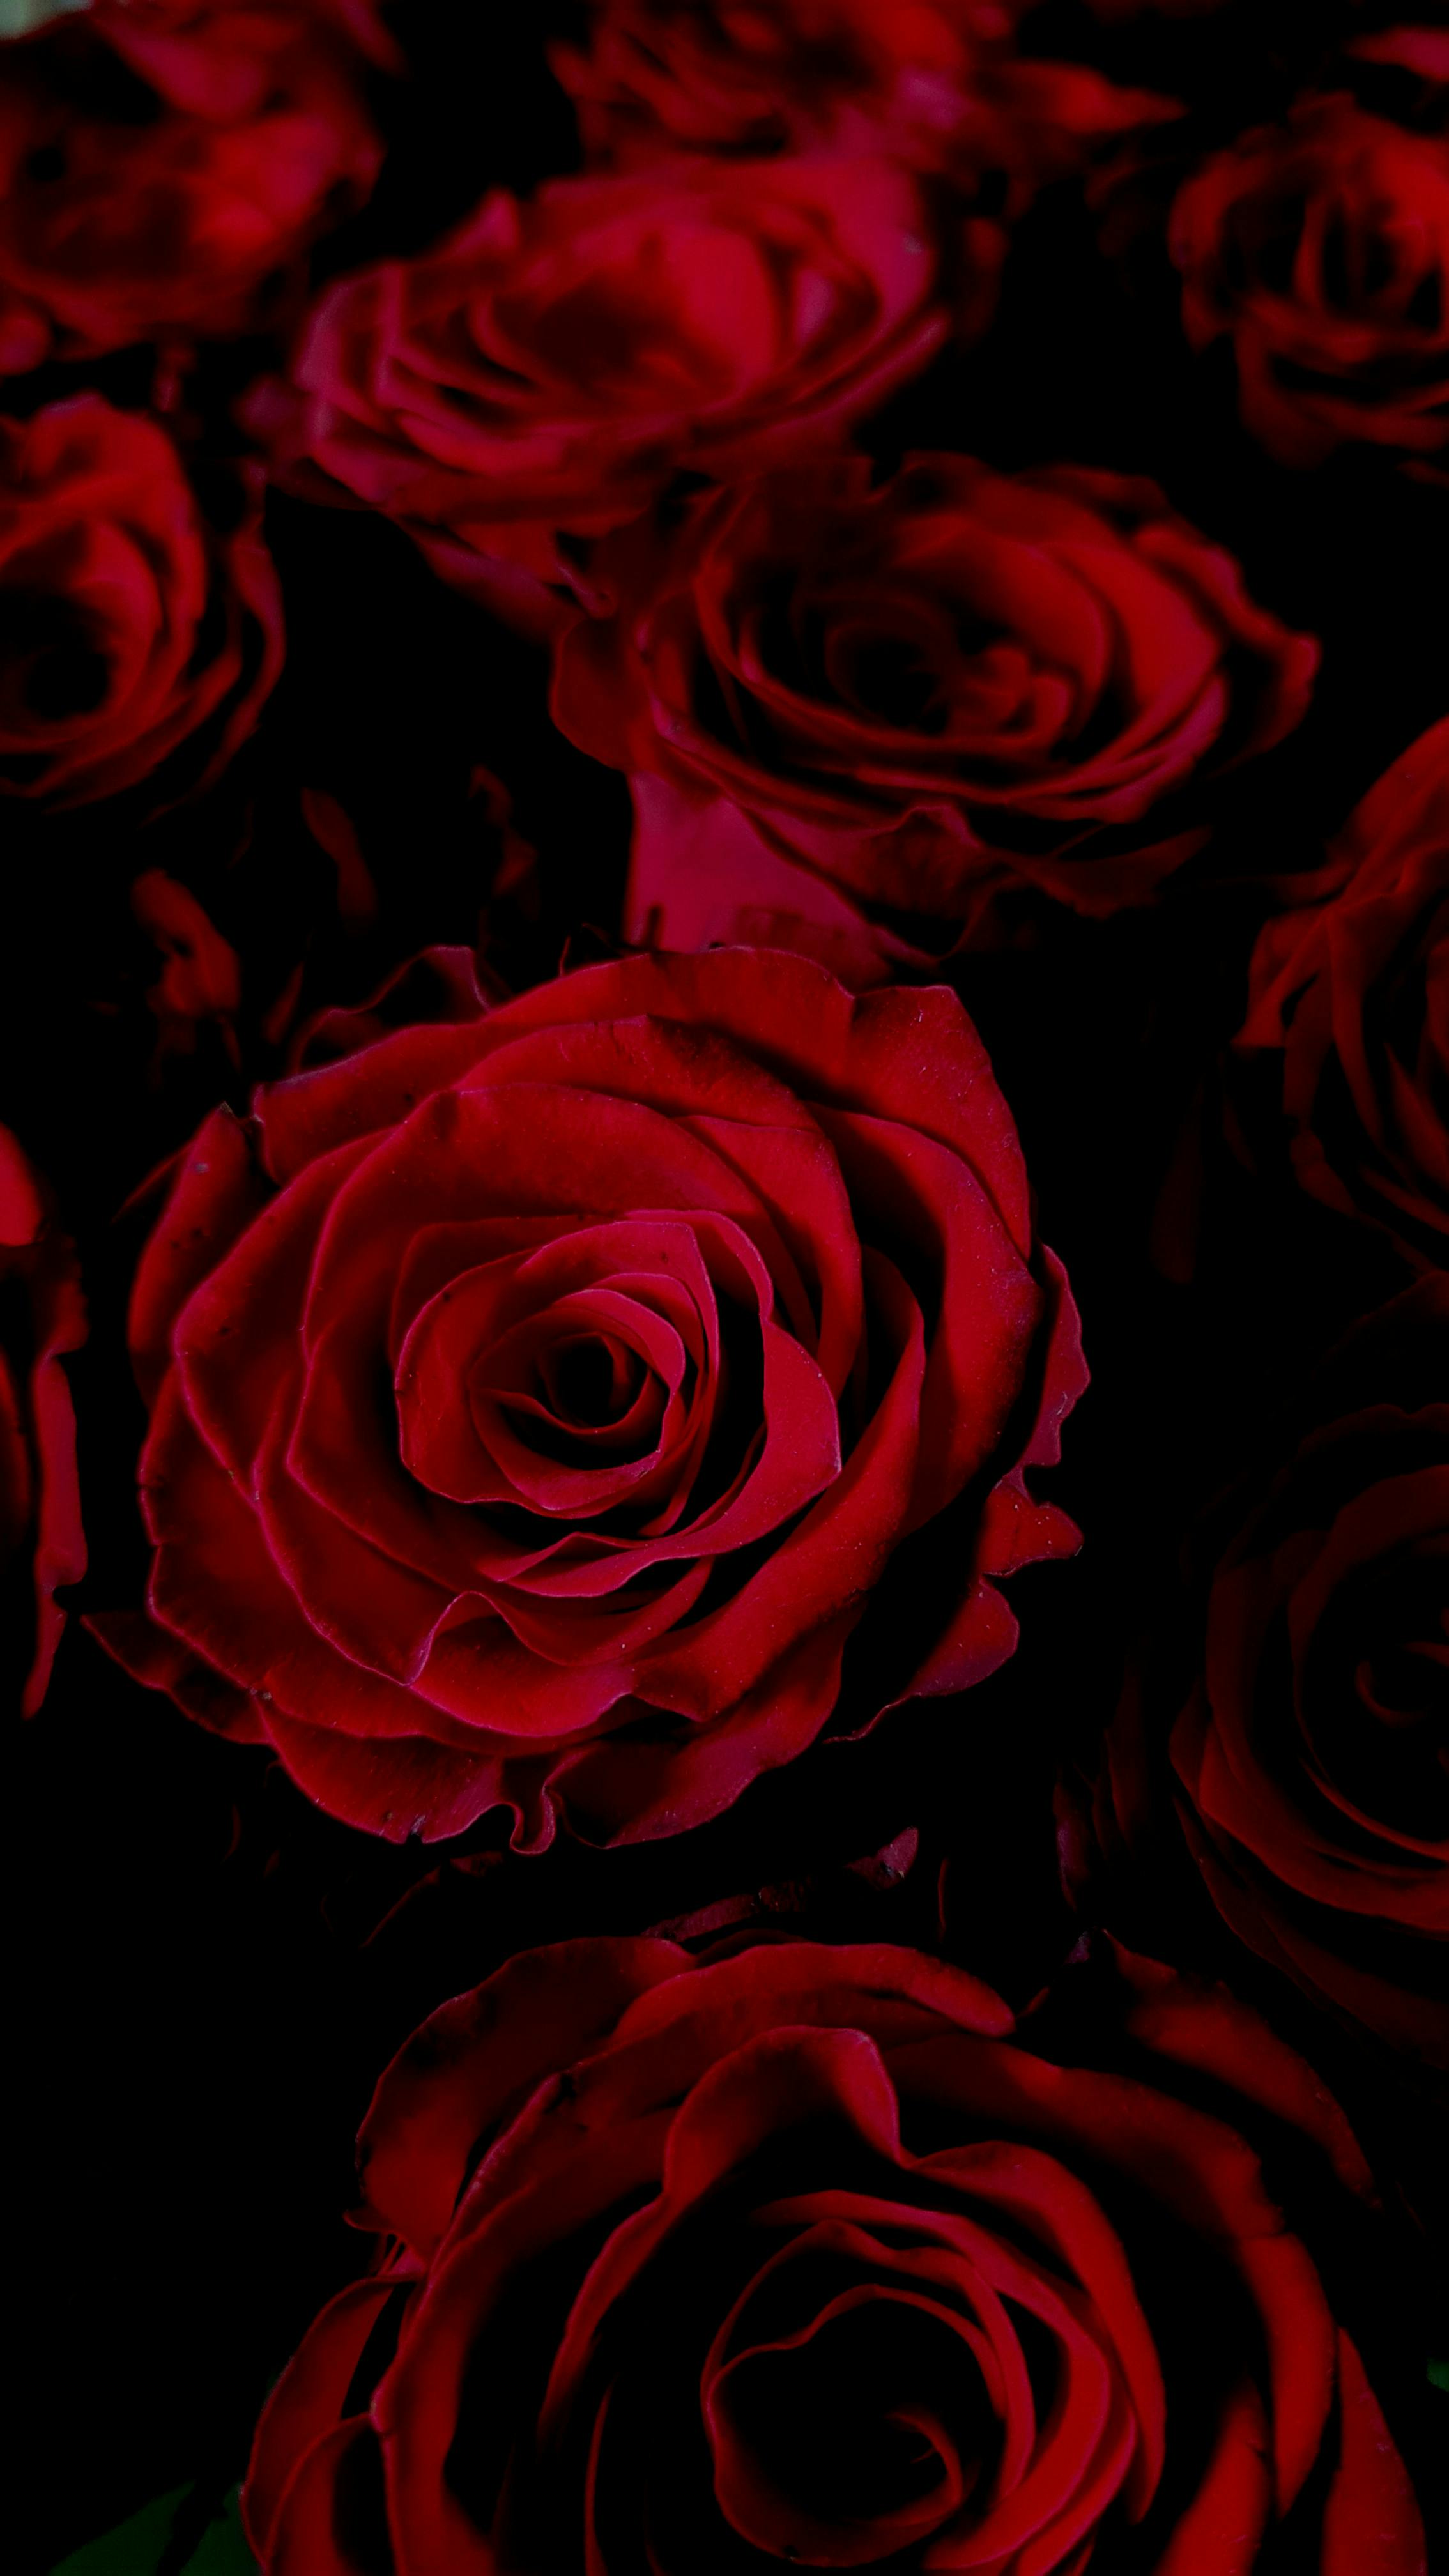 Abundance of Red Roses · Free Stock Photo